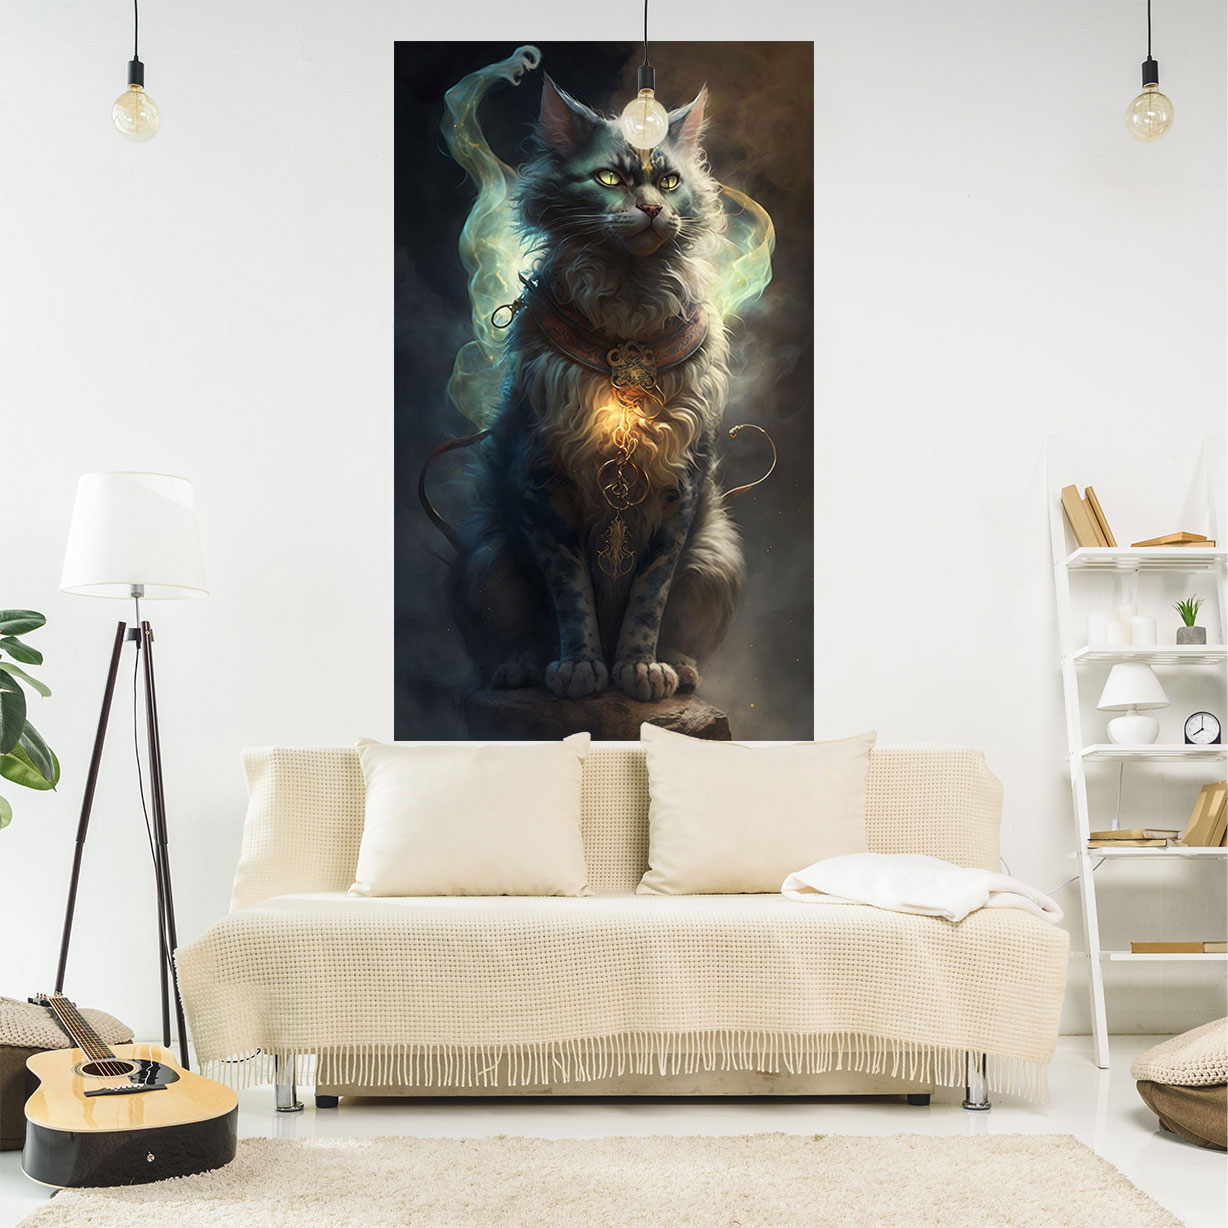 Qddeco mystiska katter meme tapestry magiska djur yogamat trolldom soffa filt sovrum eller vardagsrum dekoration